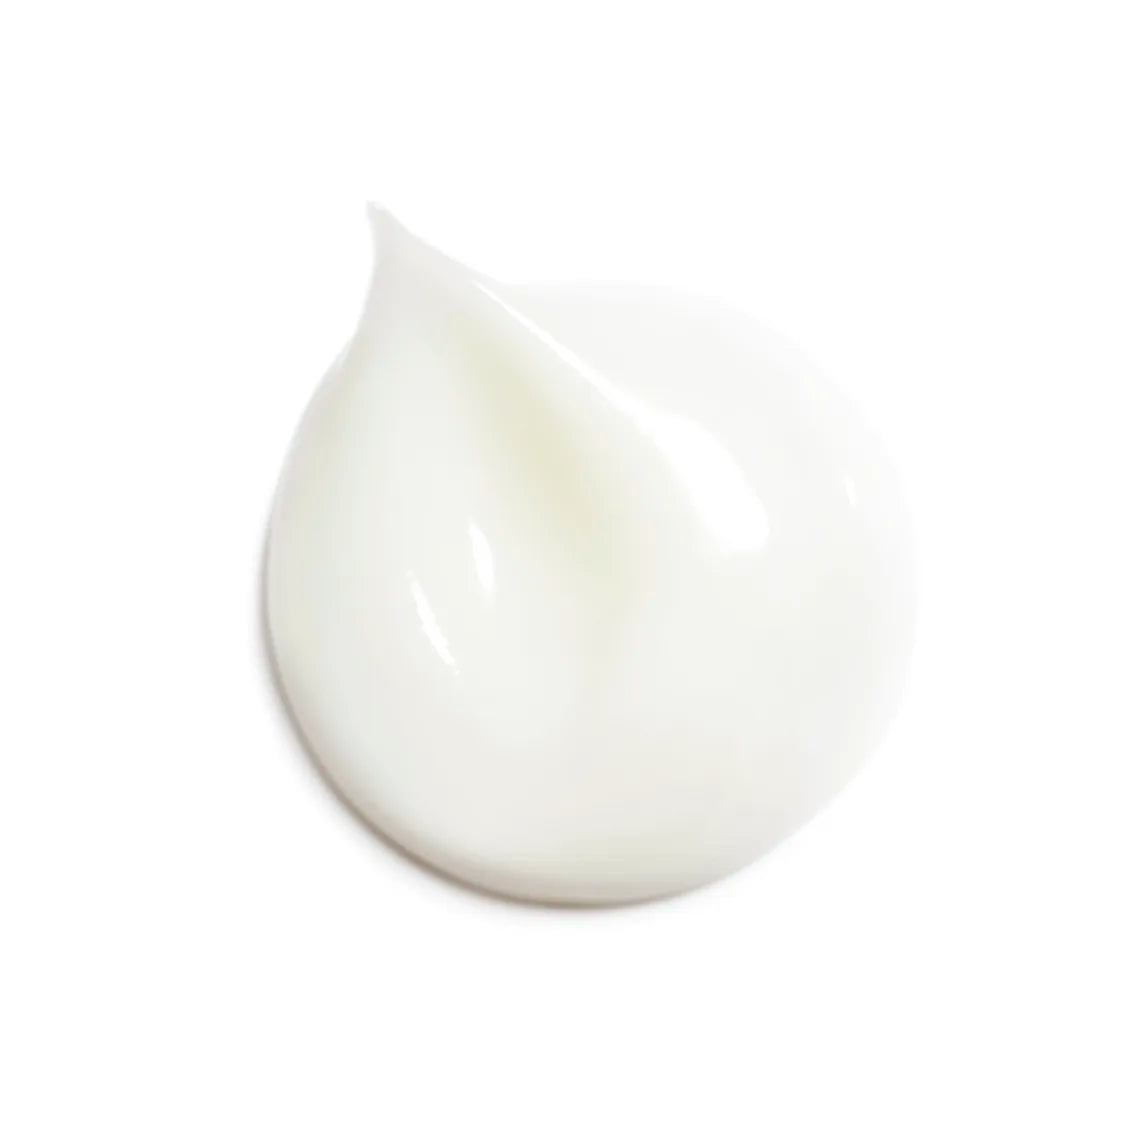 Chanel Hydra Beauty Crème Hydratation Protection Éclat 50 g